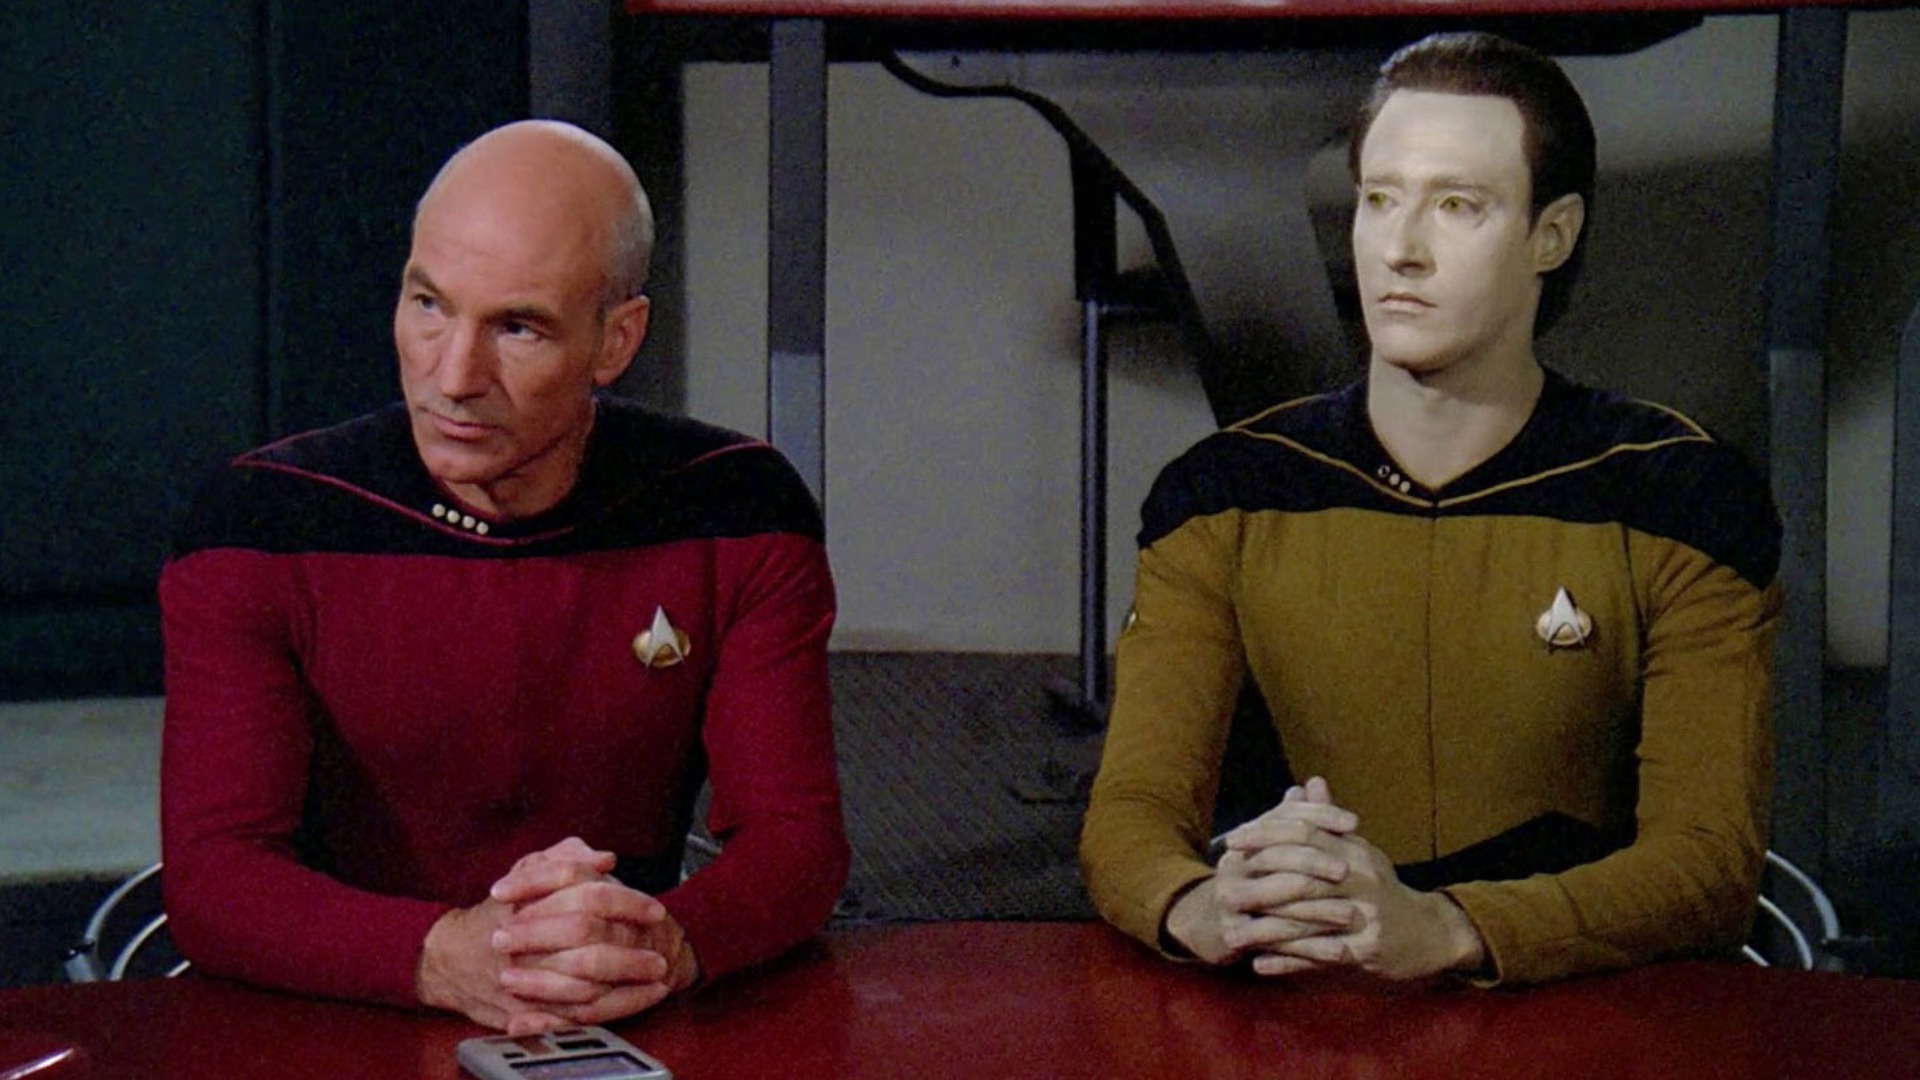 Star Trek: Picard Wallpapers